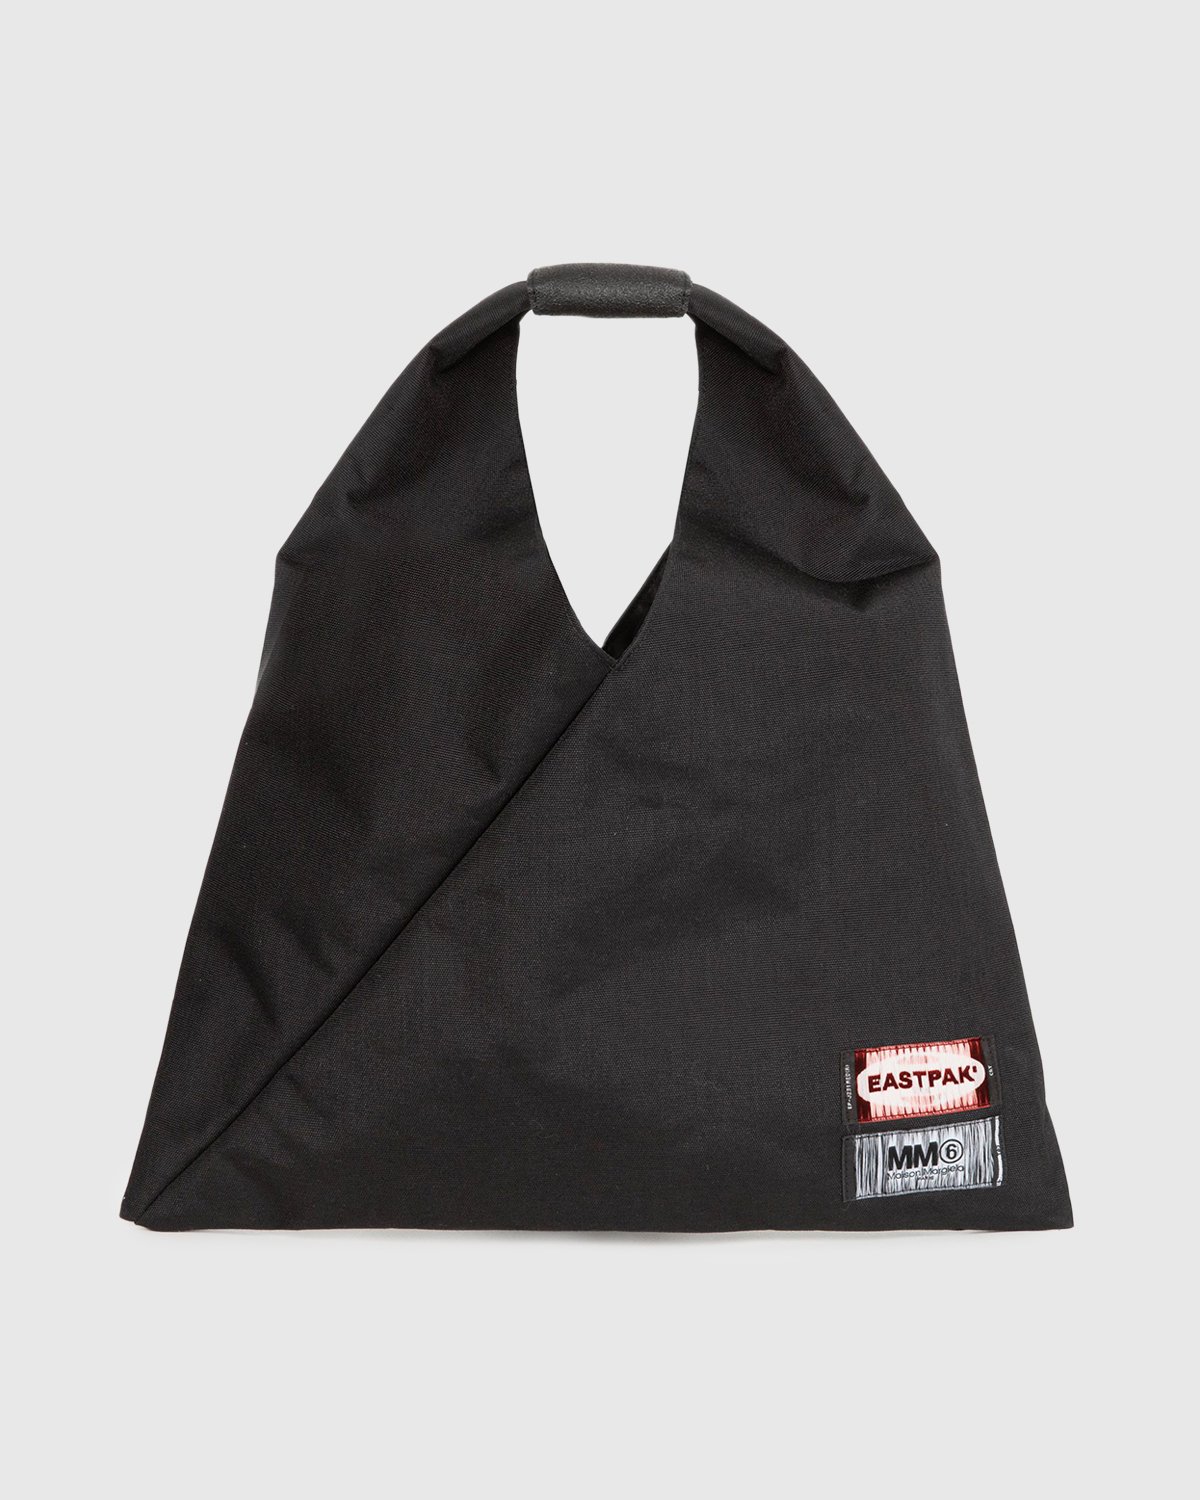 MM6 Maison Margiela x Eastpak - Shopping Bag Black - Accessories - Black - Image 1